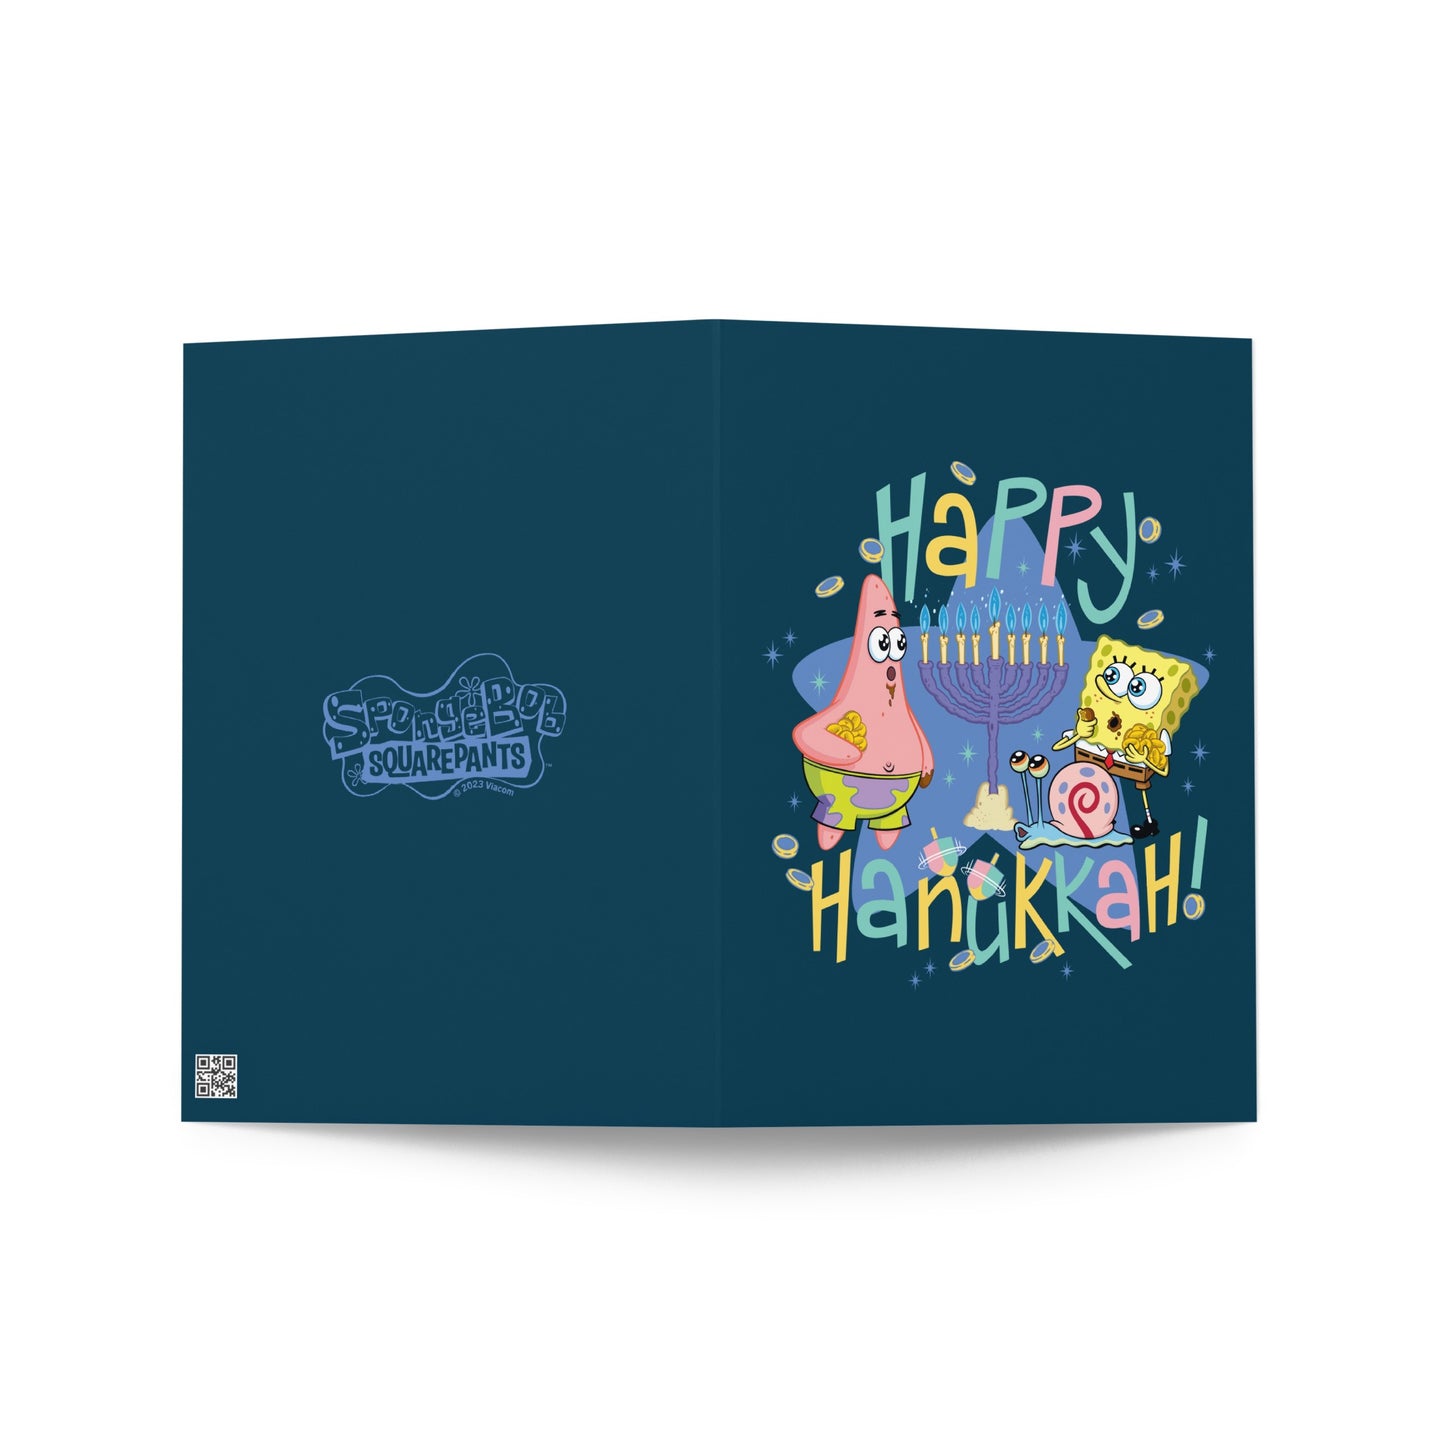 SpongeBob Hanukkah Greeting Card